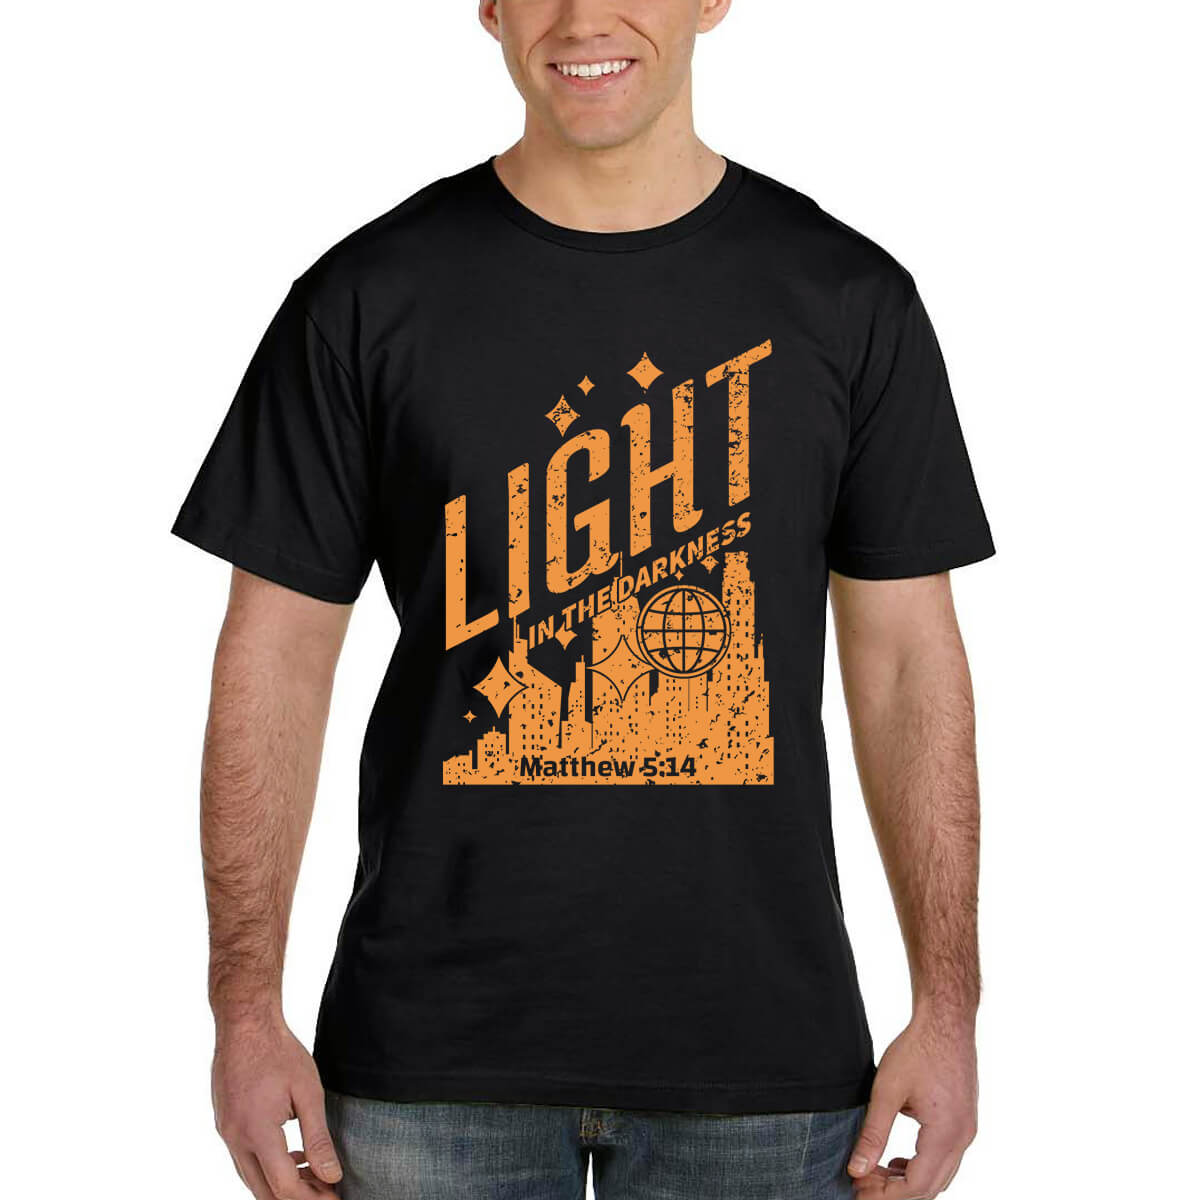 Light In The Darkness Men's T-Shirt